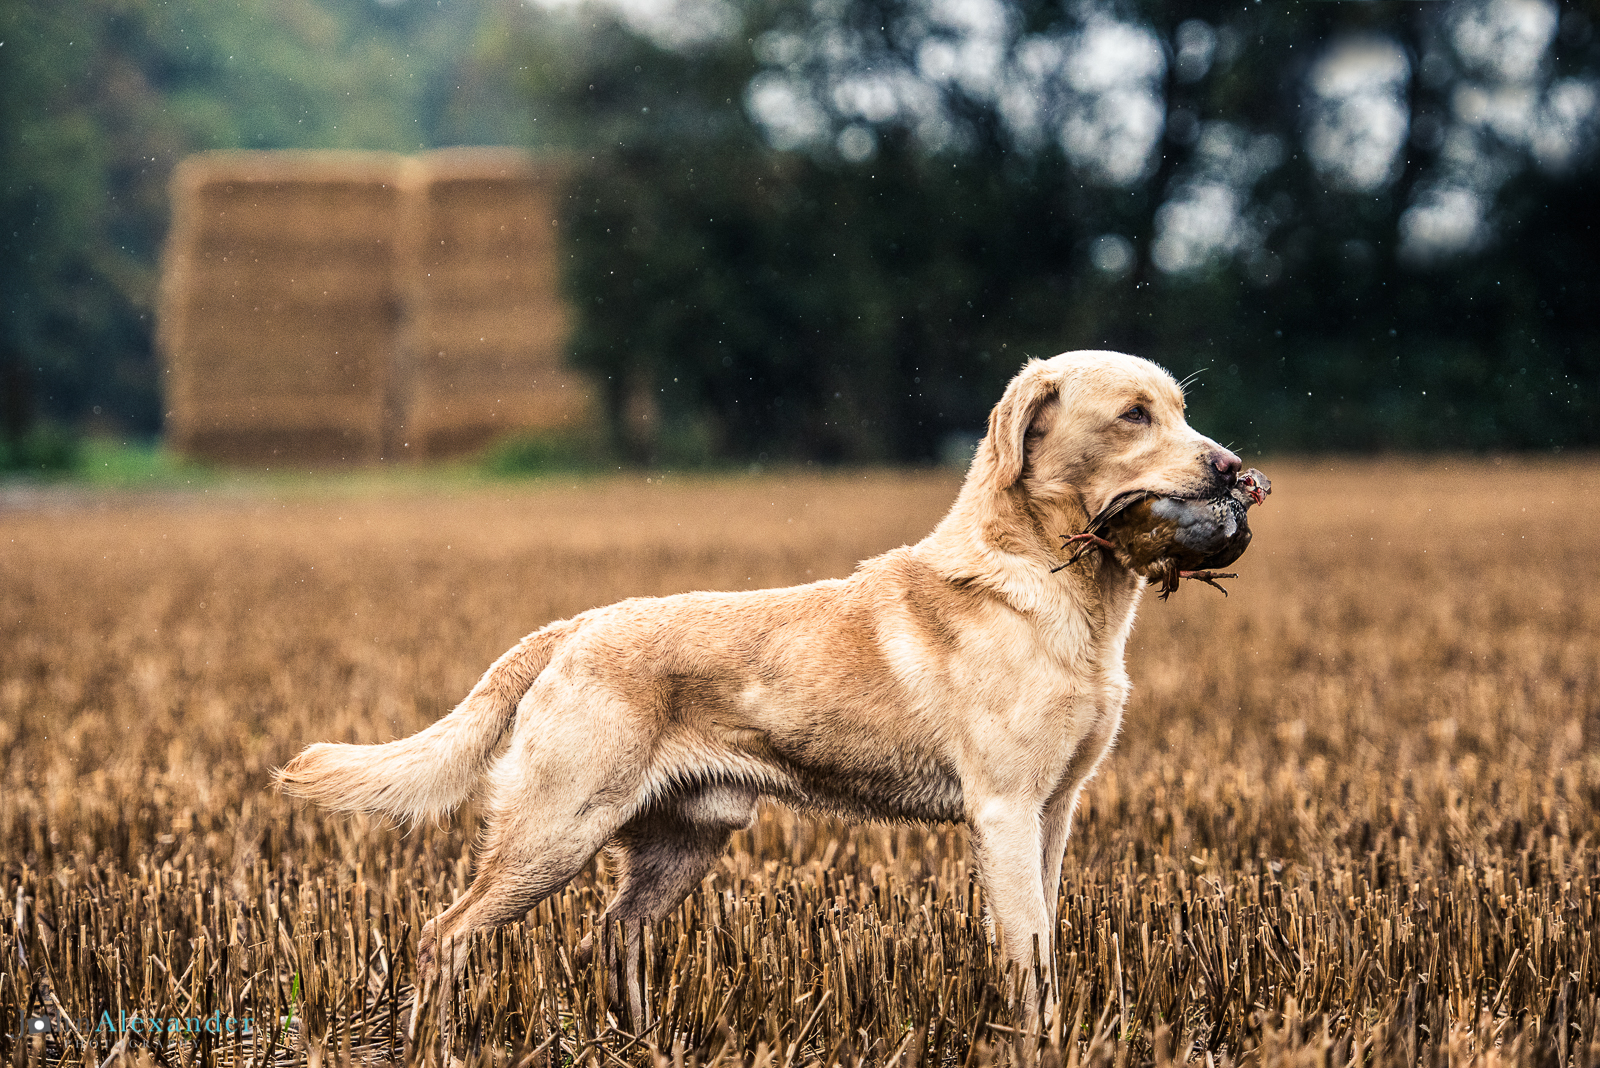 golden retriever gun dog with partridge in mouth